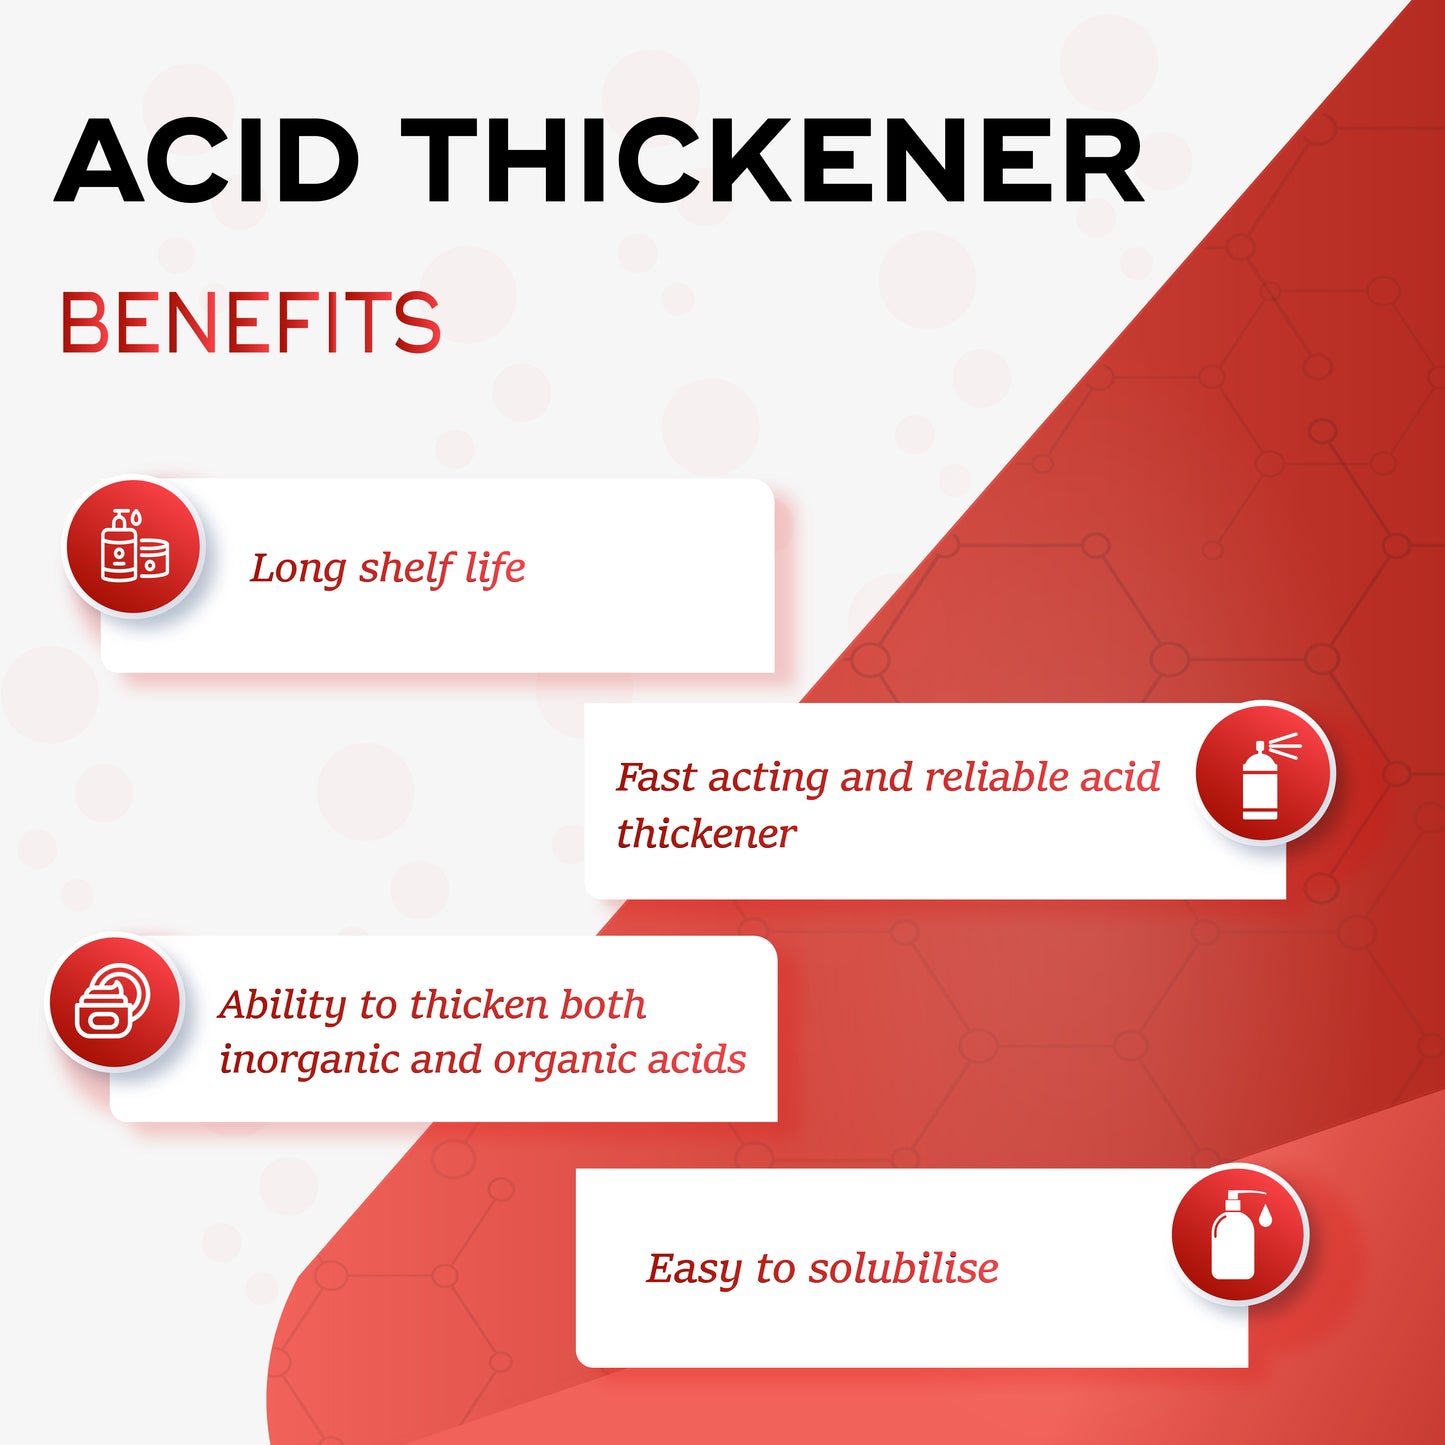 list of acid thickener benefits, acid thickener benefits